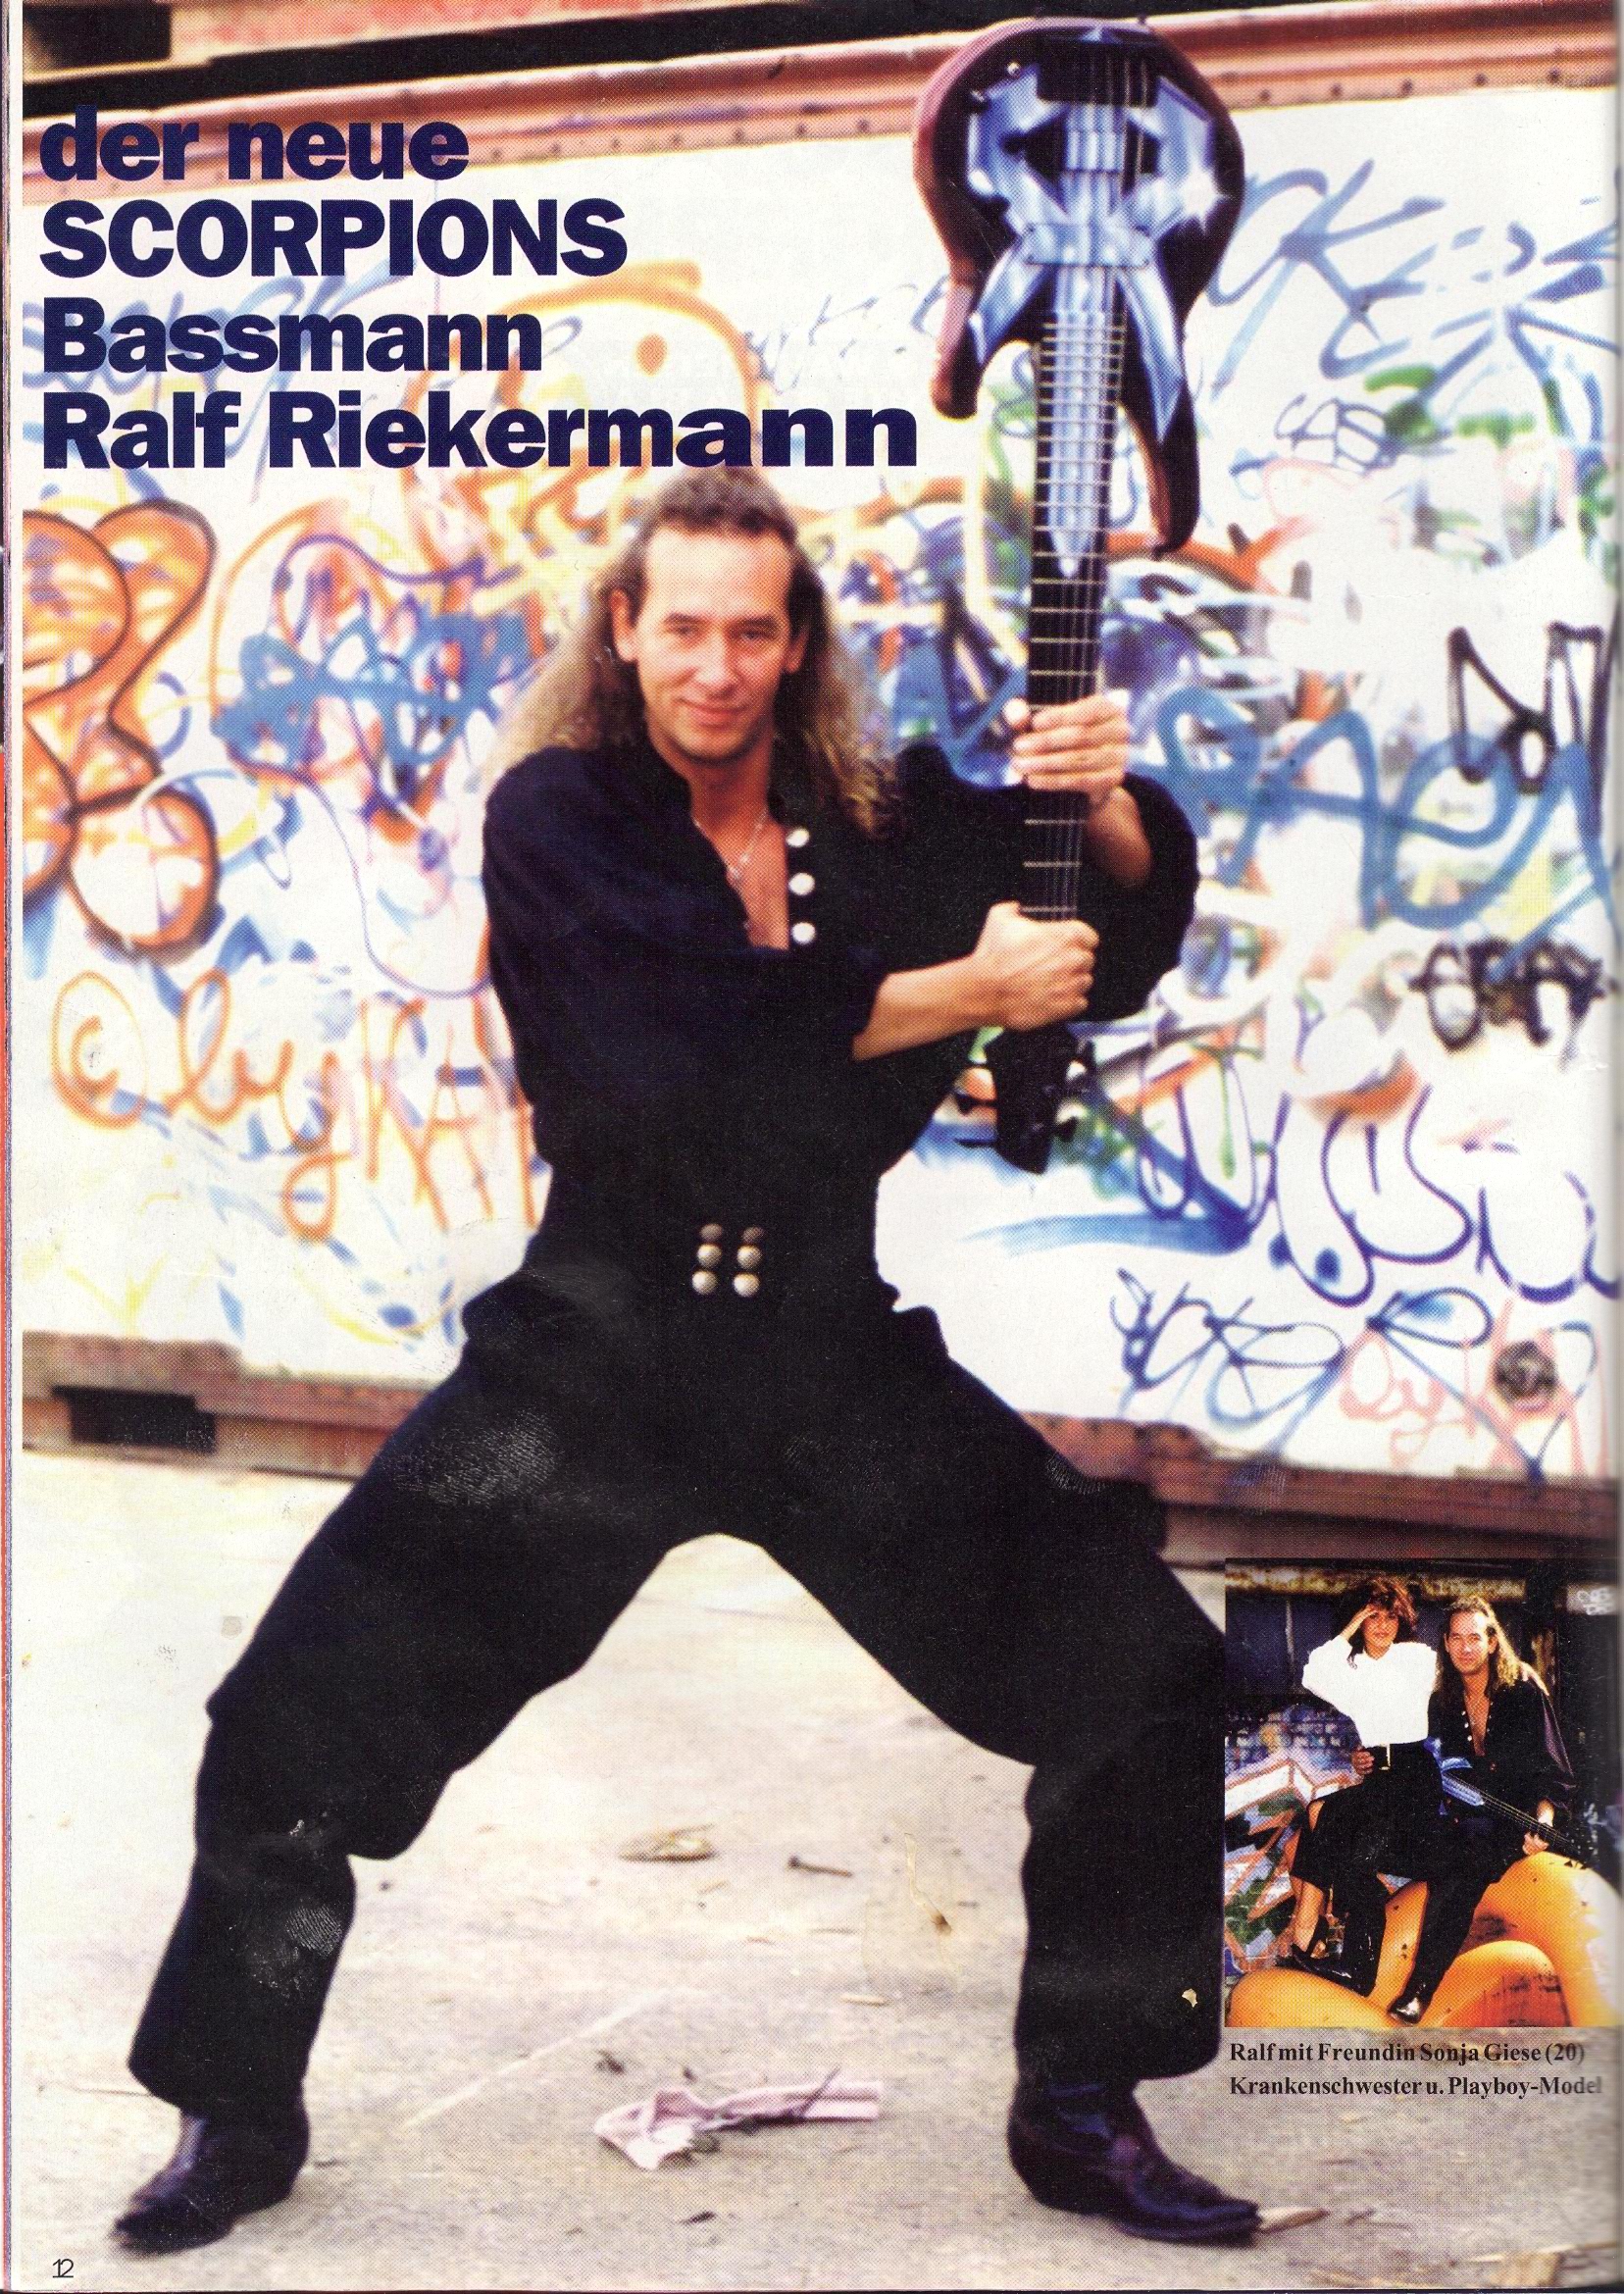 Ralph Rieckermann